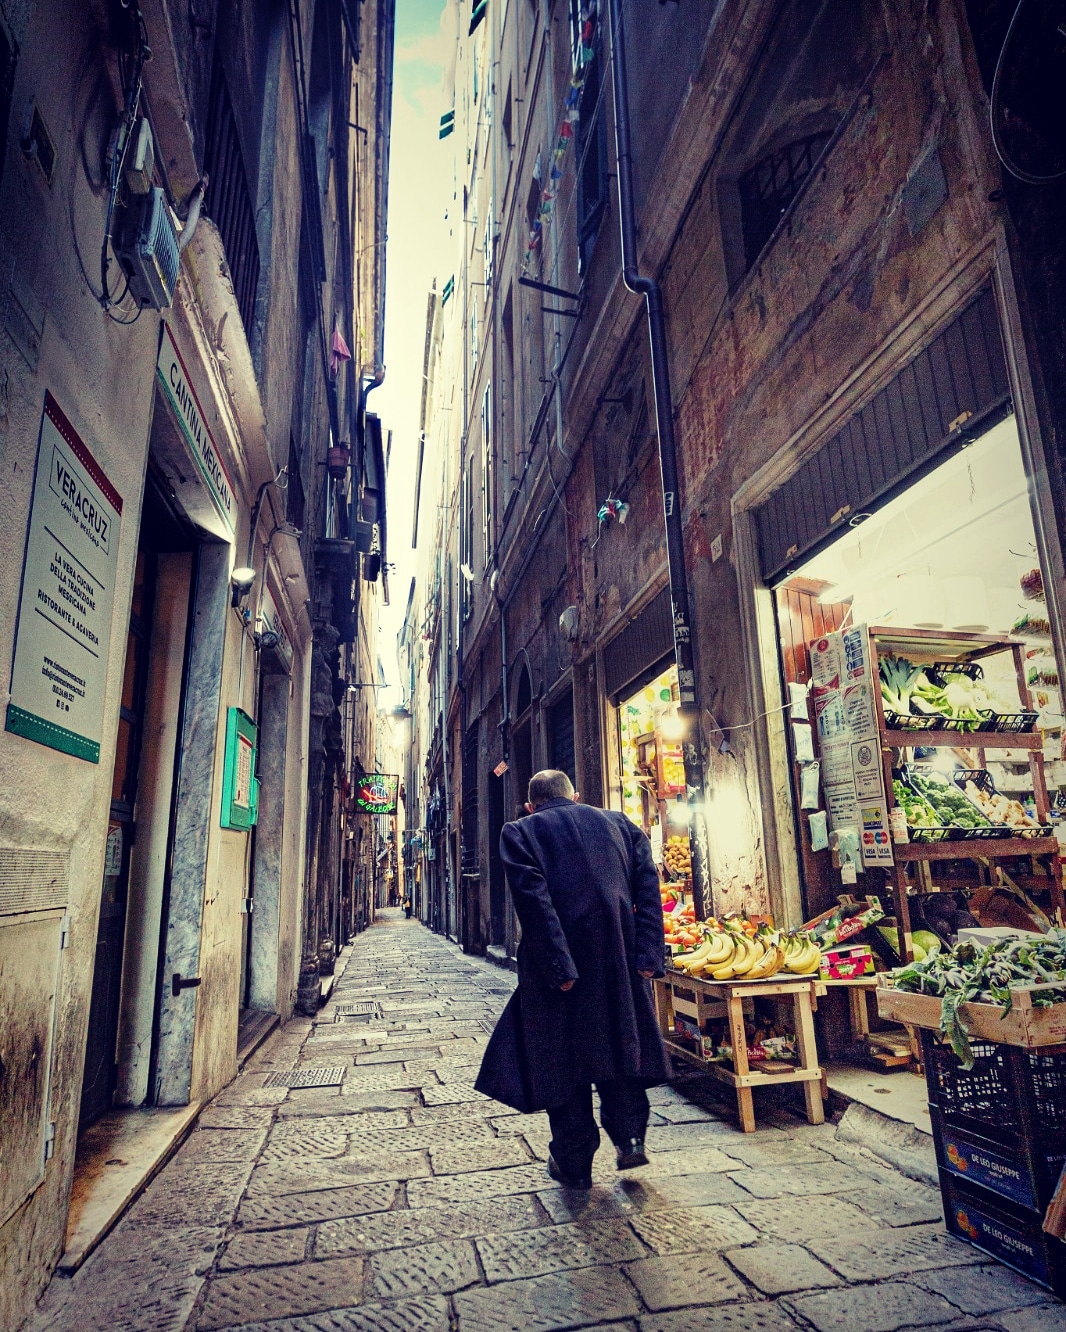 Alleys of Genoa...